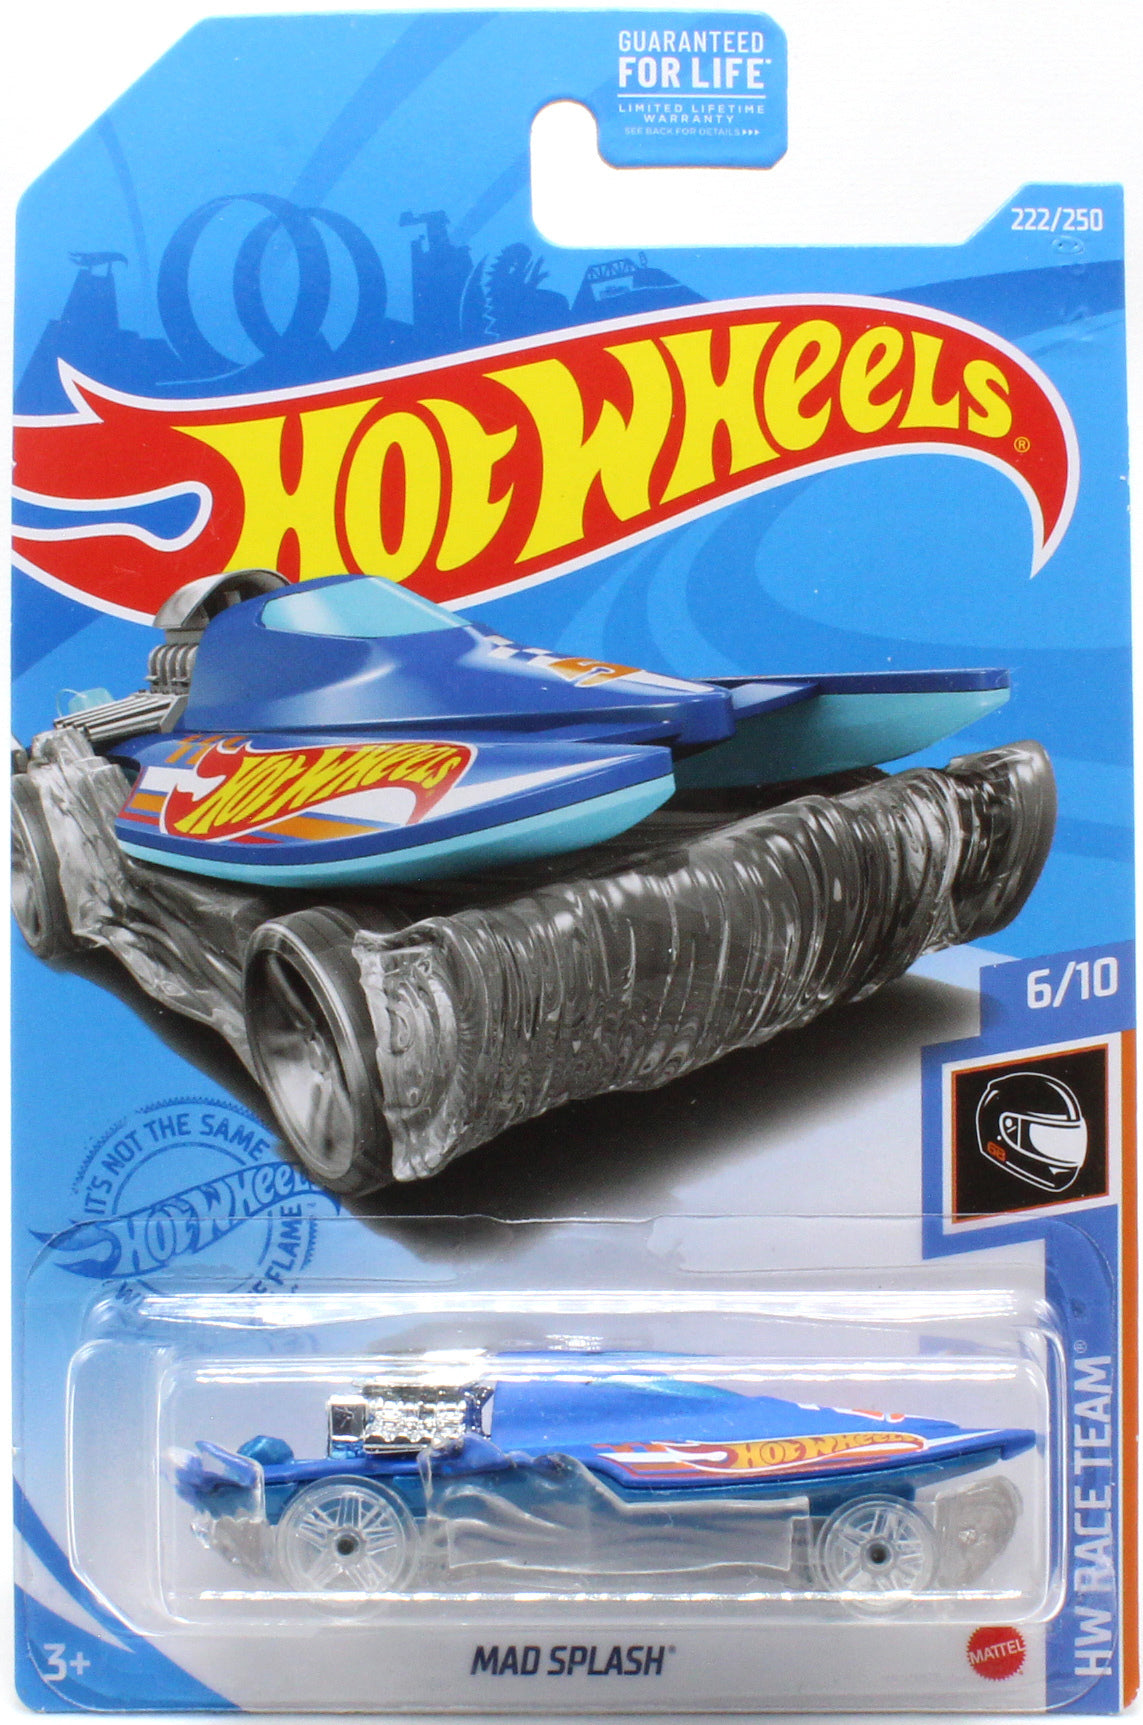 Hot Wheels 2021 - Collector # 222/250 - HW Race Team 6/10 - Mad Splash - Blue